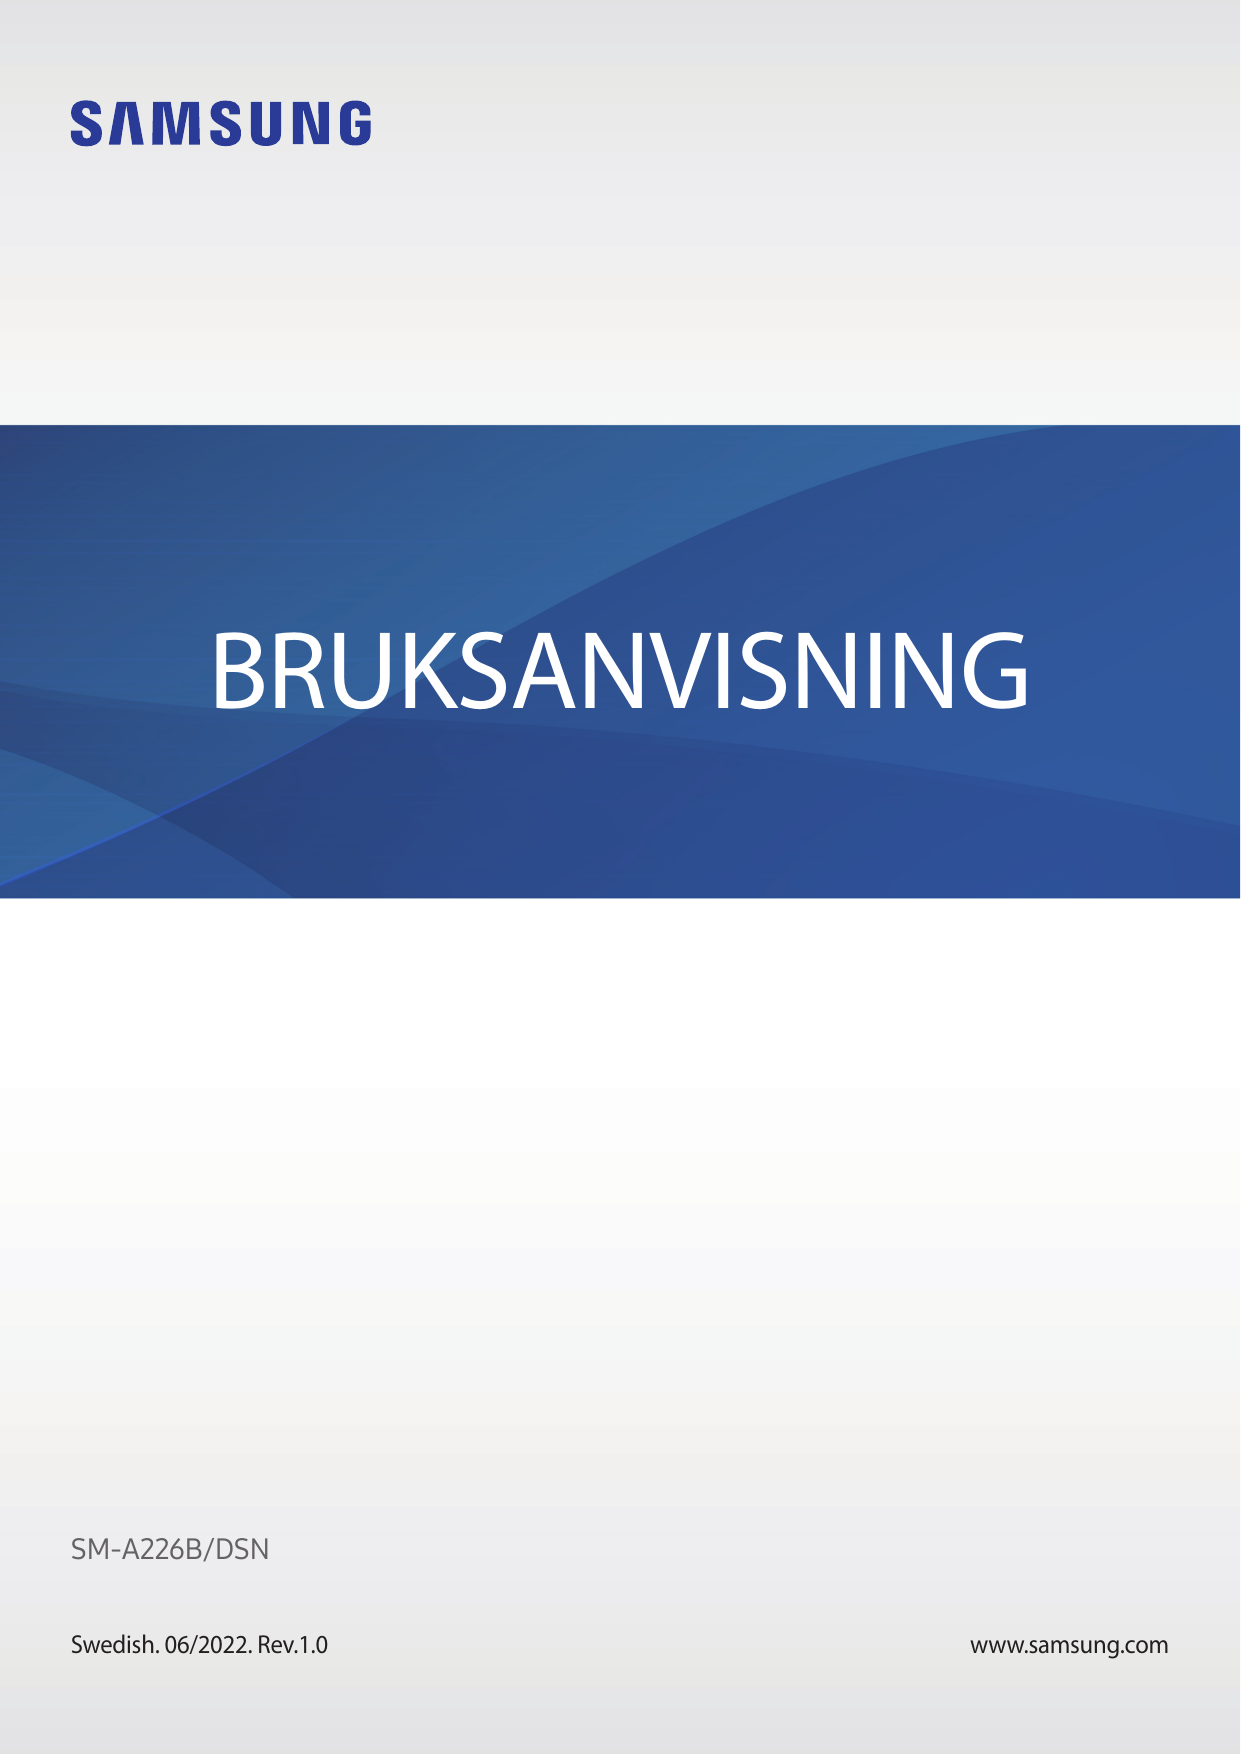 BRUKSANVISNINGSM-A226B/DSNSwedish. 06/2022. Rev.1.0www.samsung.com